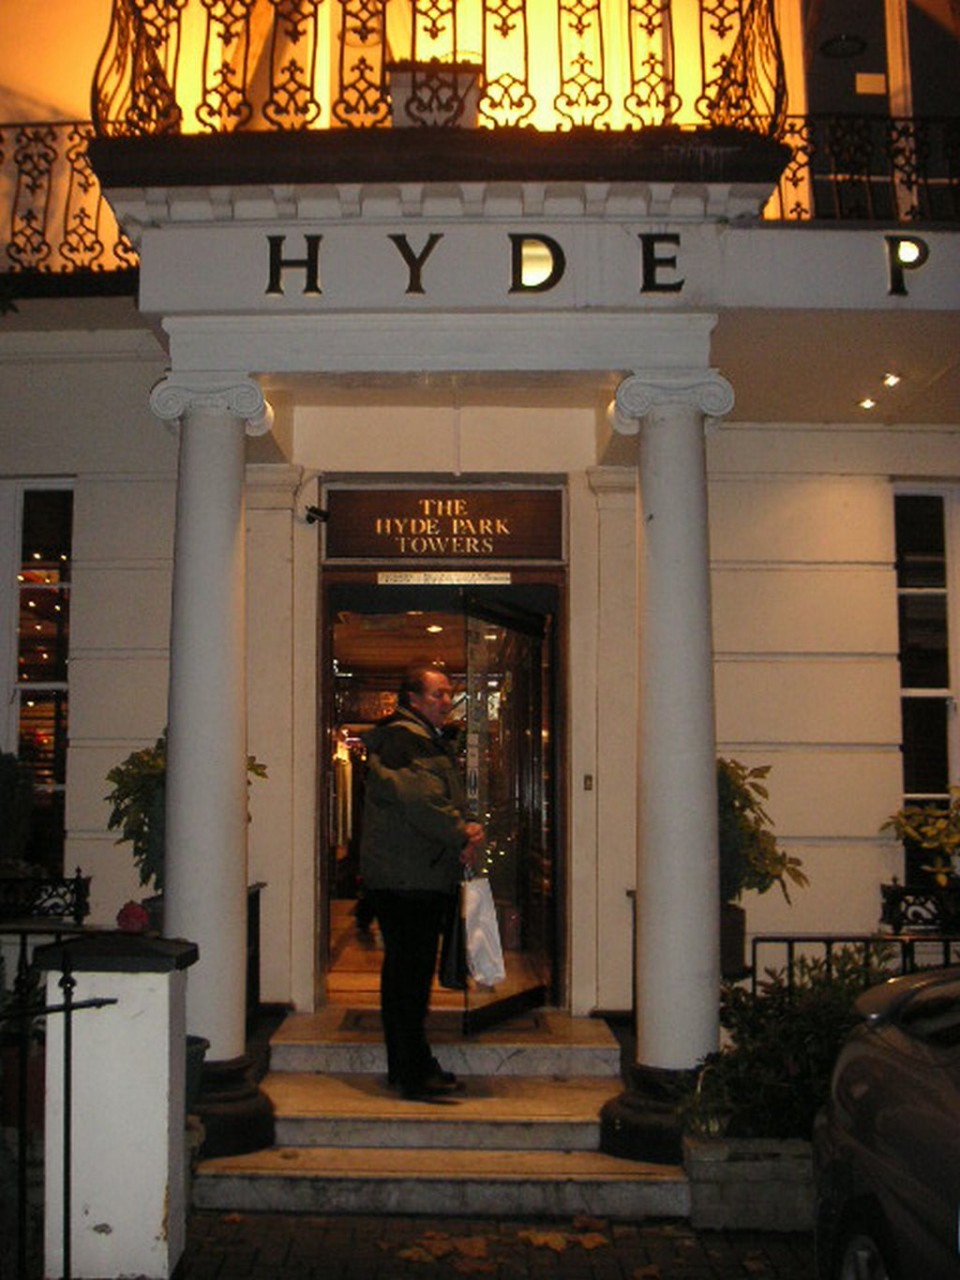 Unser Hotel nähe Hyde Park, wie man erahnen kann!